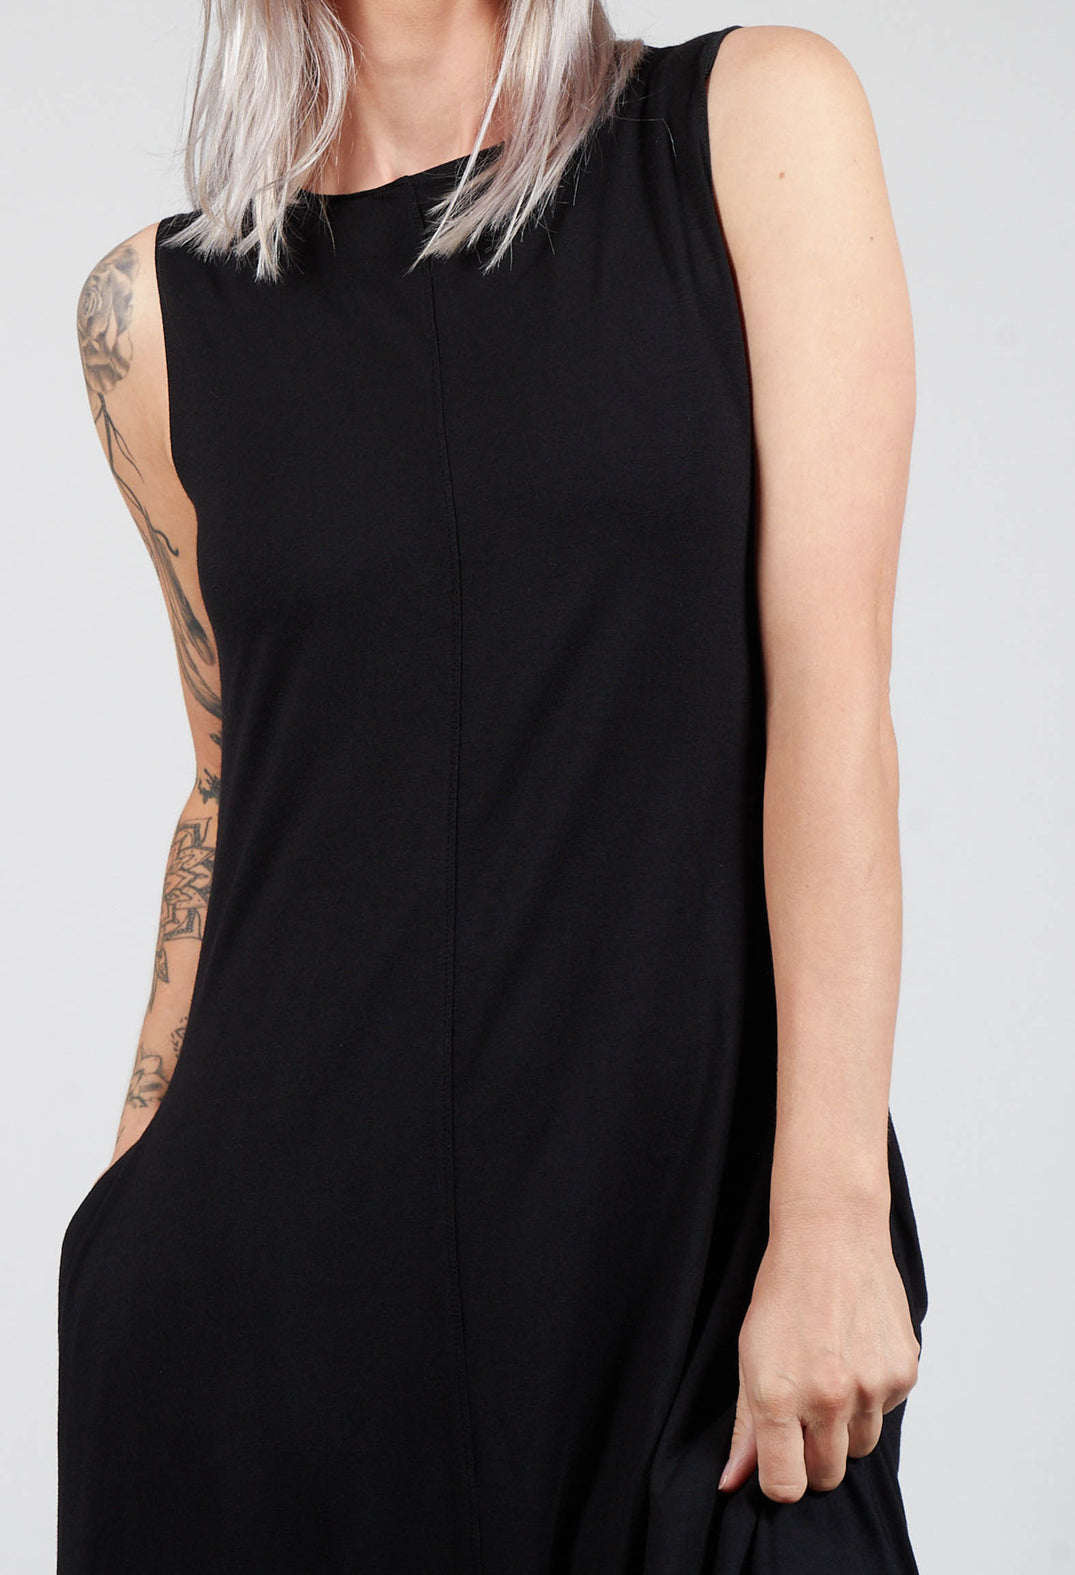 Sleeveless Dress Style Jumpsuit in Black